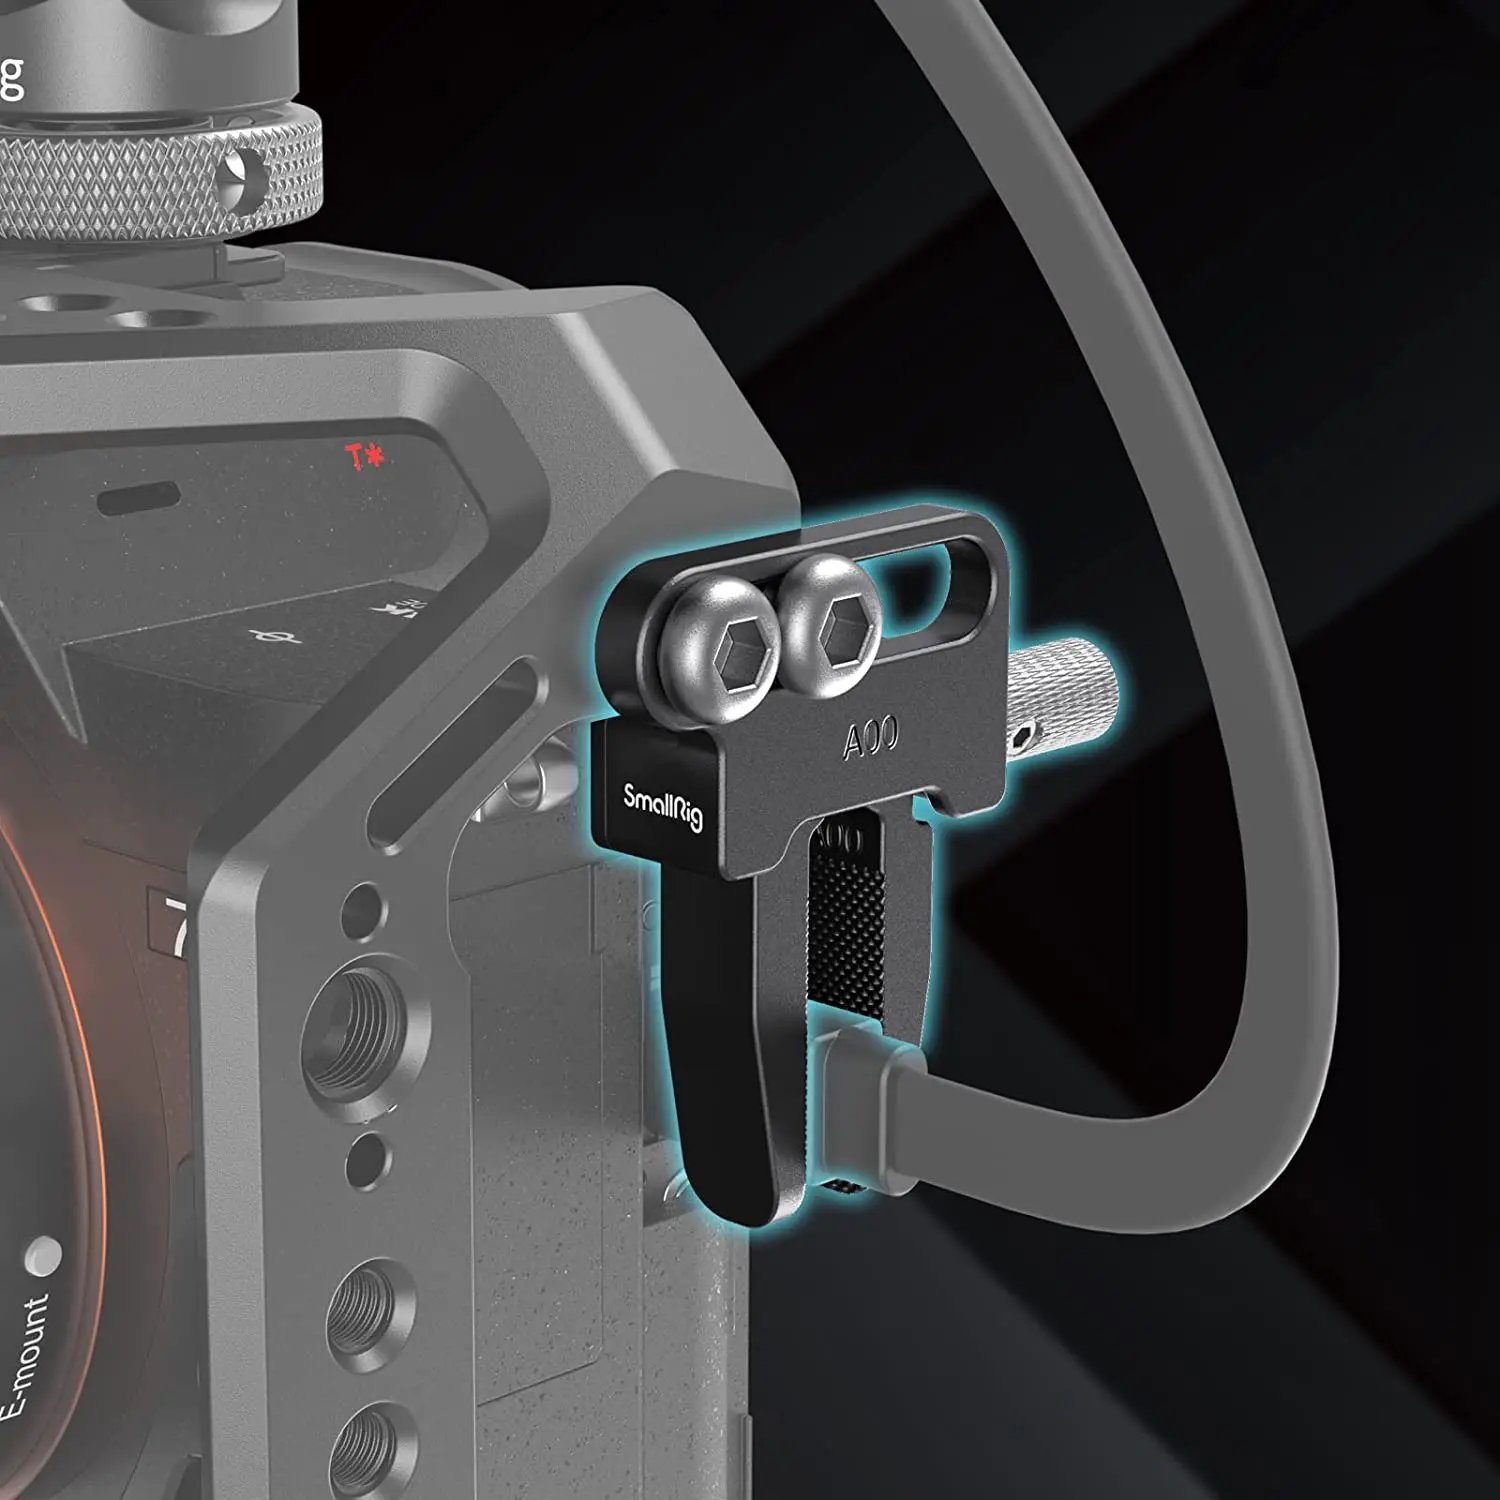 Uurigカメラ ブラケットR068 hmiケーブル クリップ付き sonr068 a72 a73 12mm調整可能 HDMI互換 アクセサリ